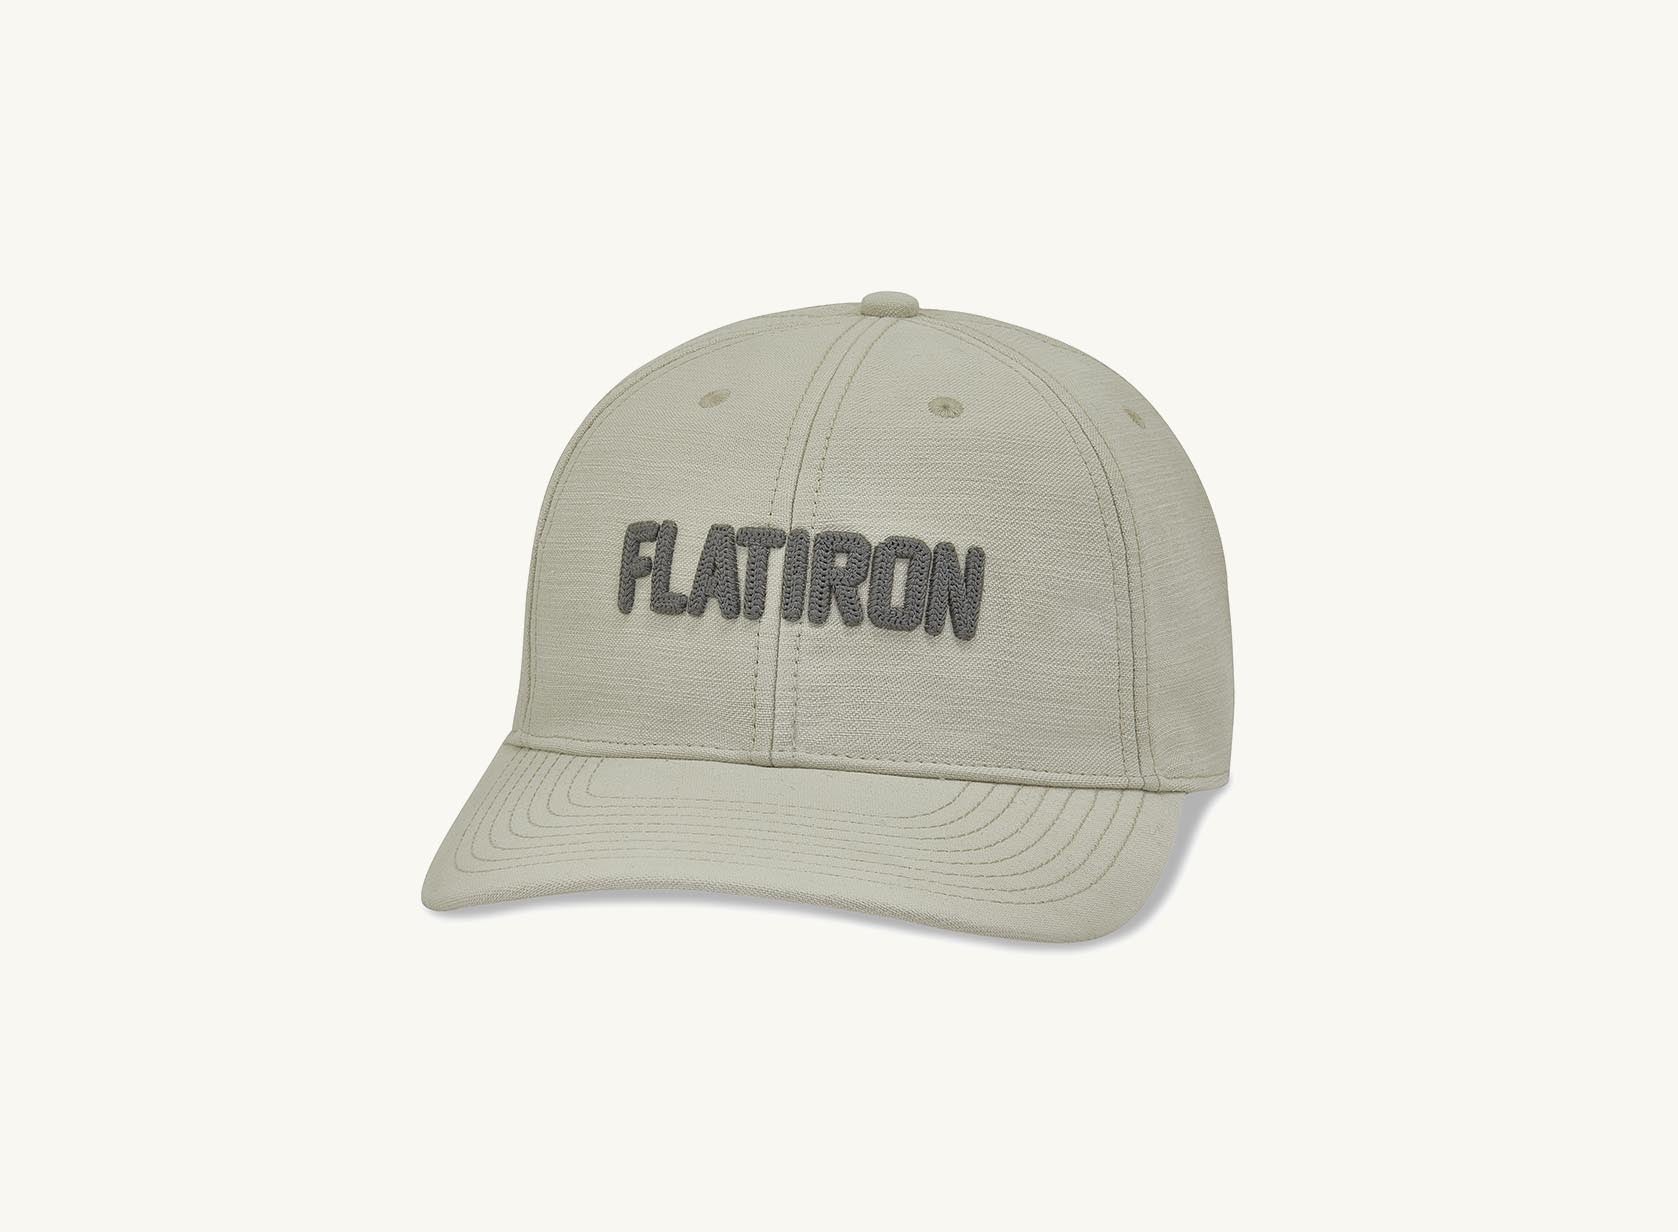 gray flatiron hat